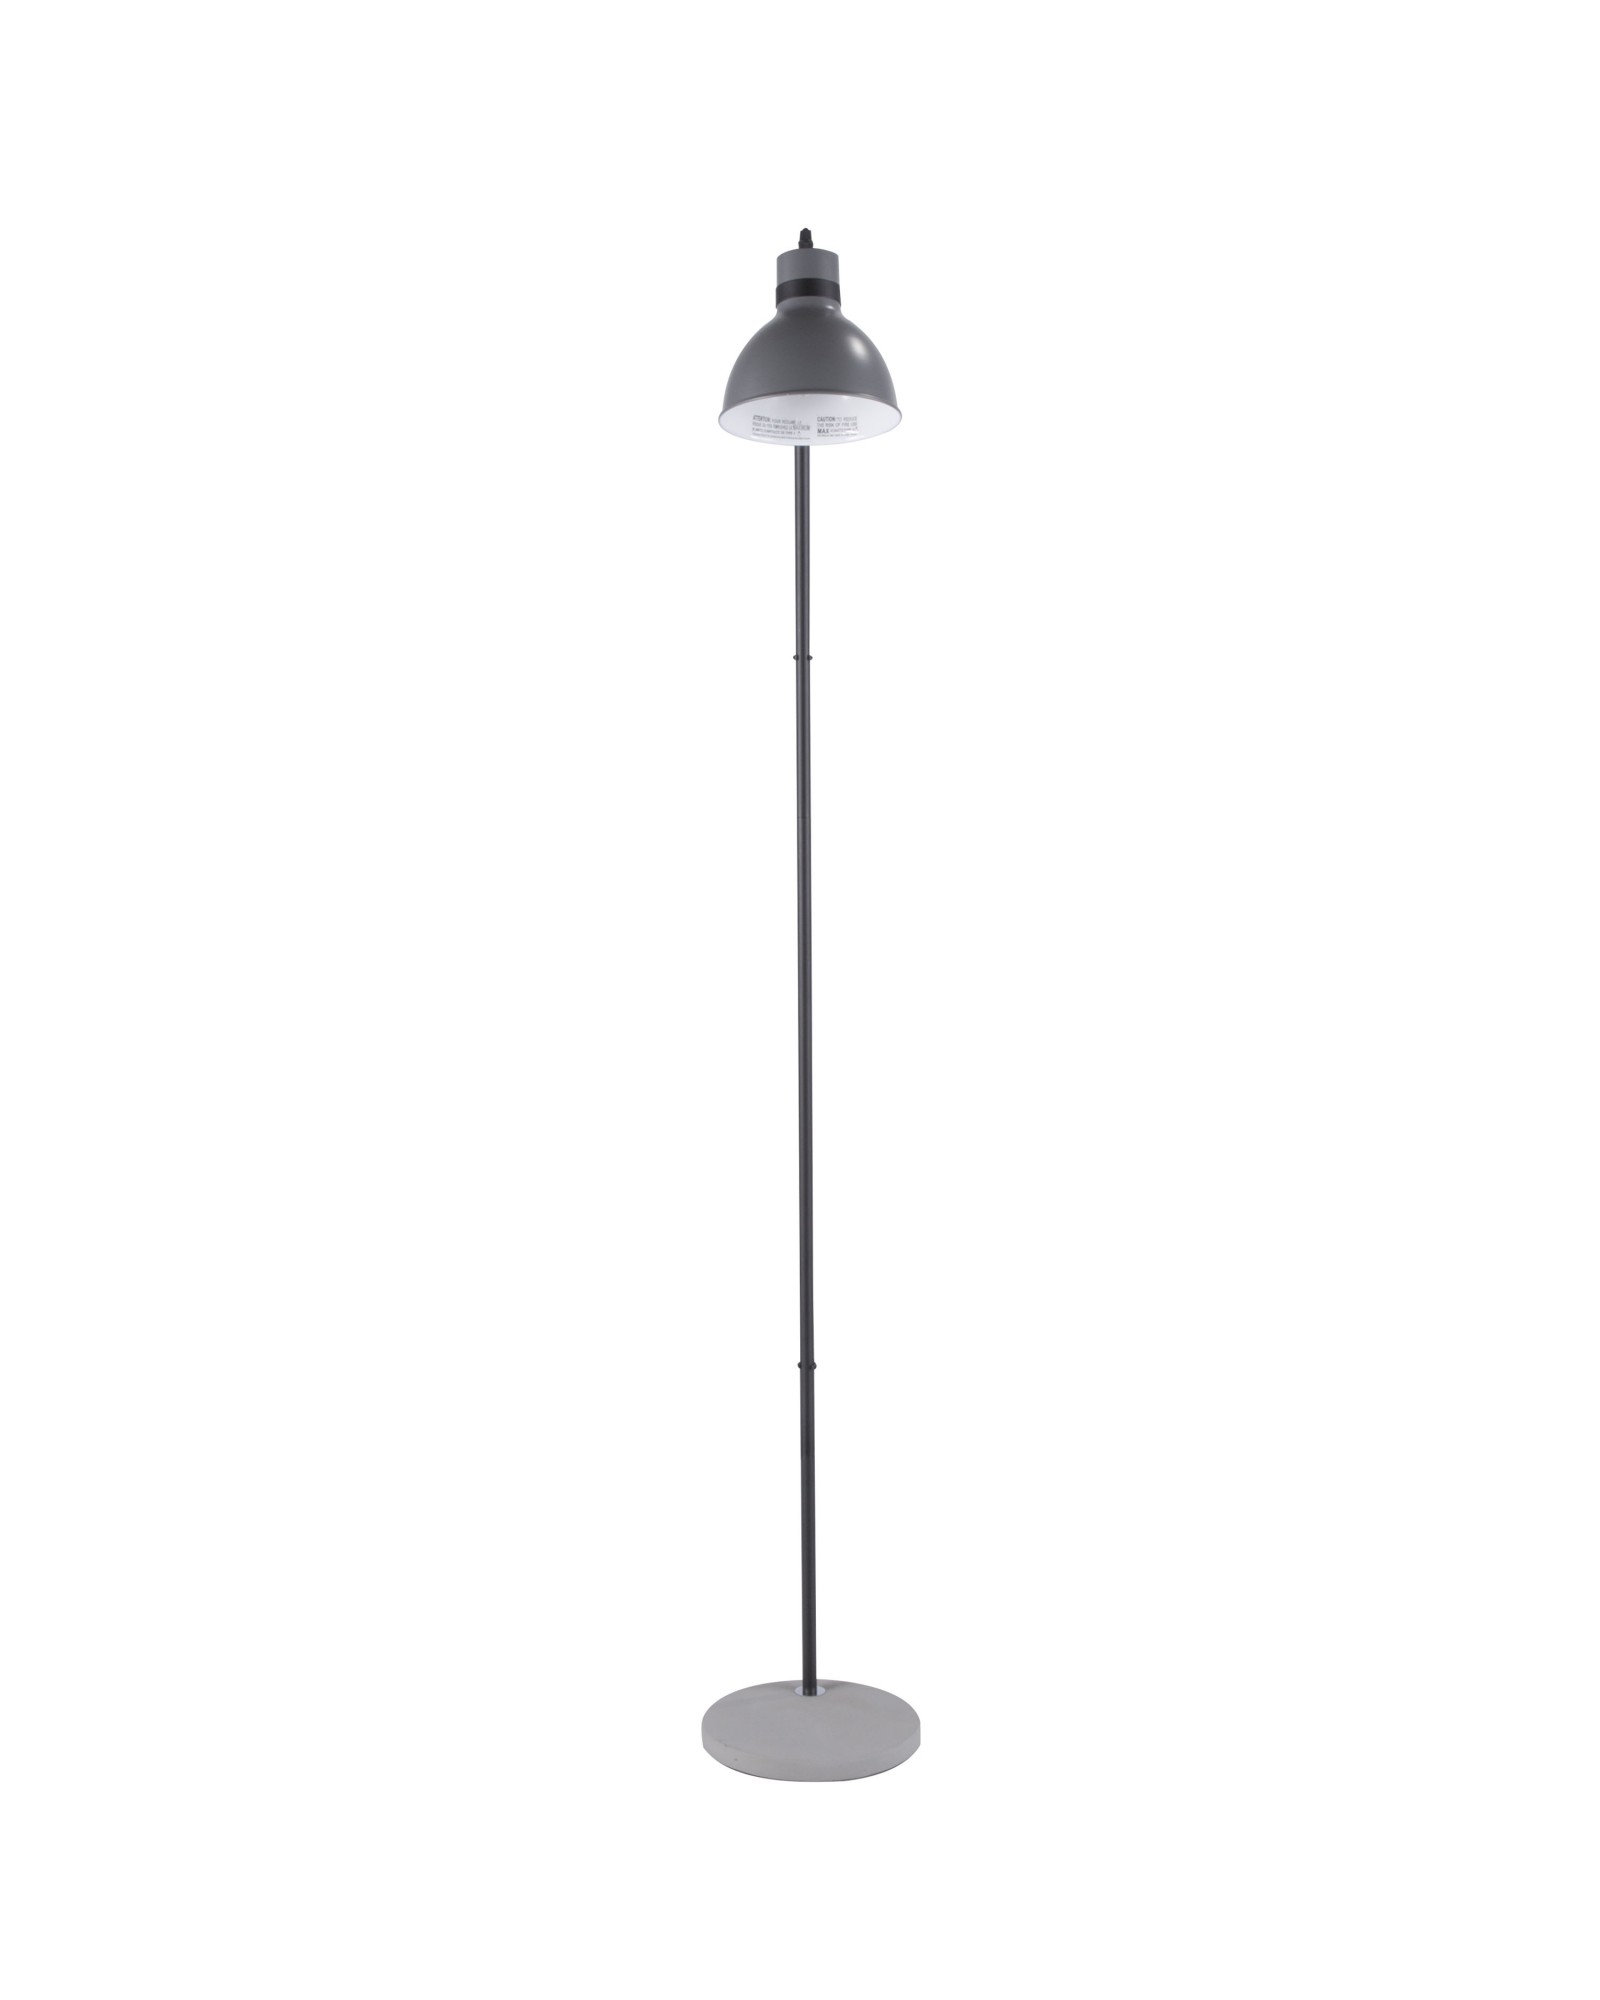 Concrete Industrial Floor Lamp in Black and Grey